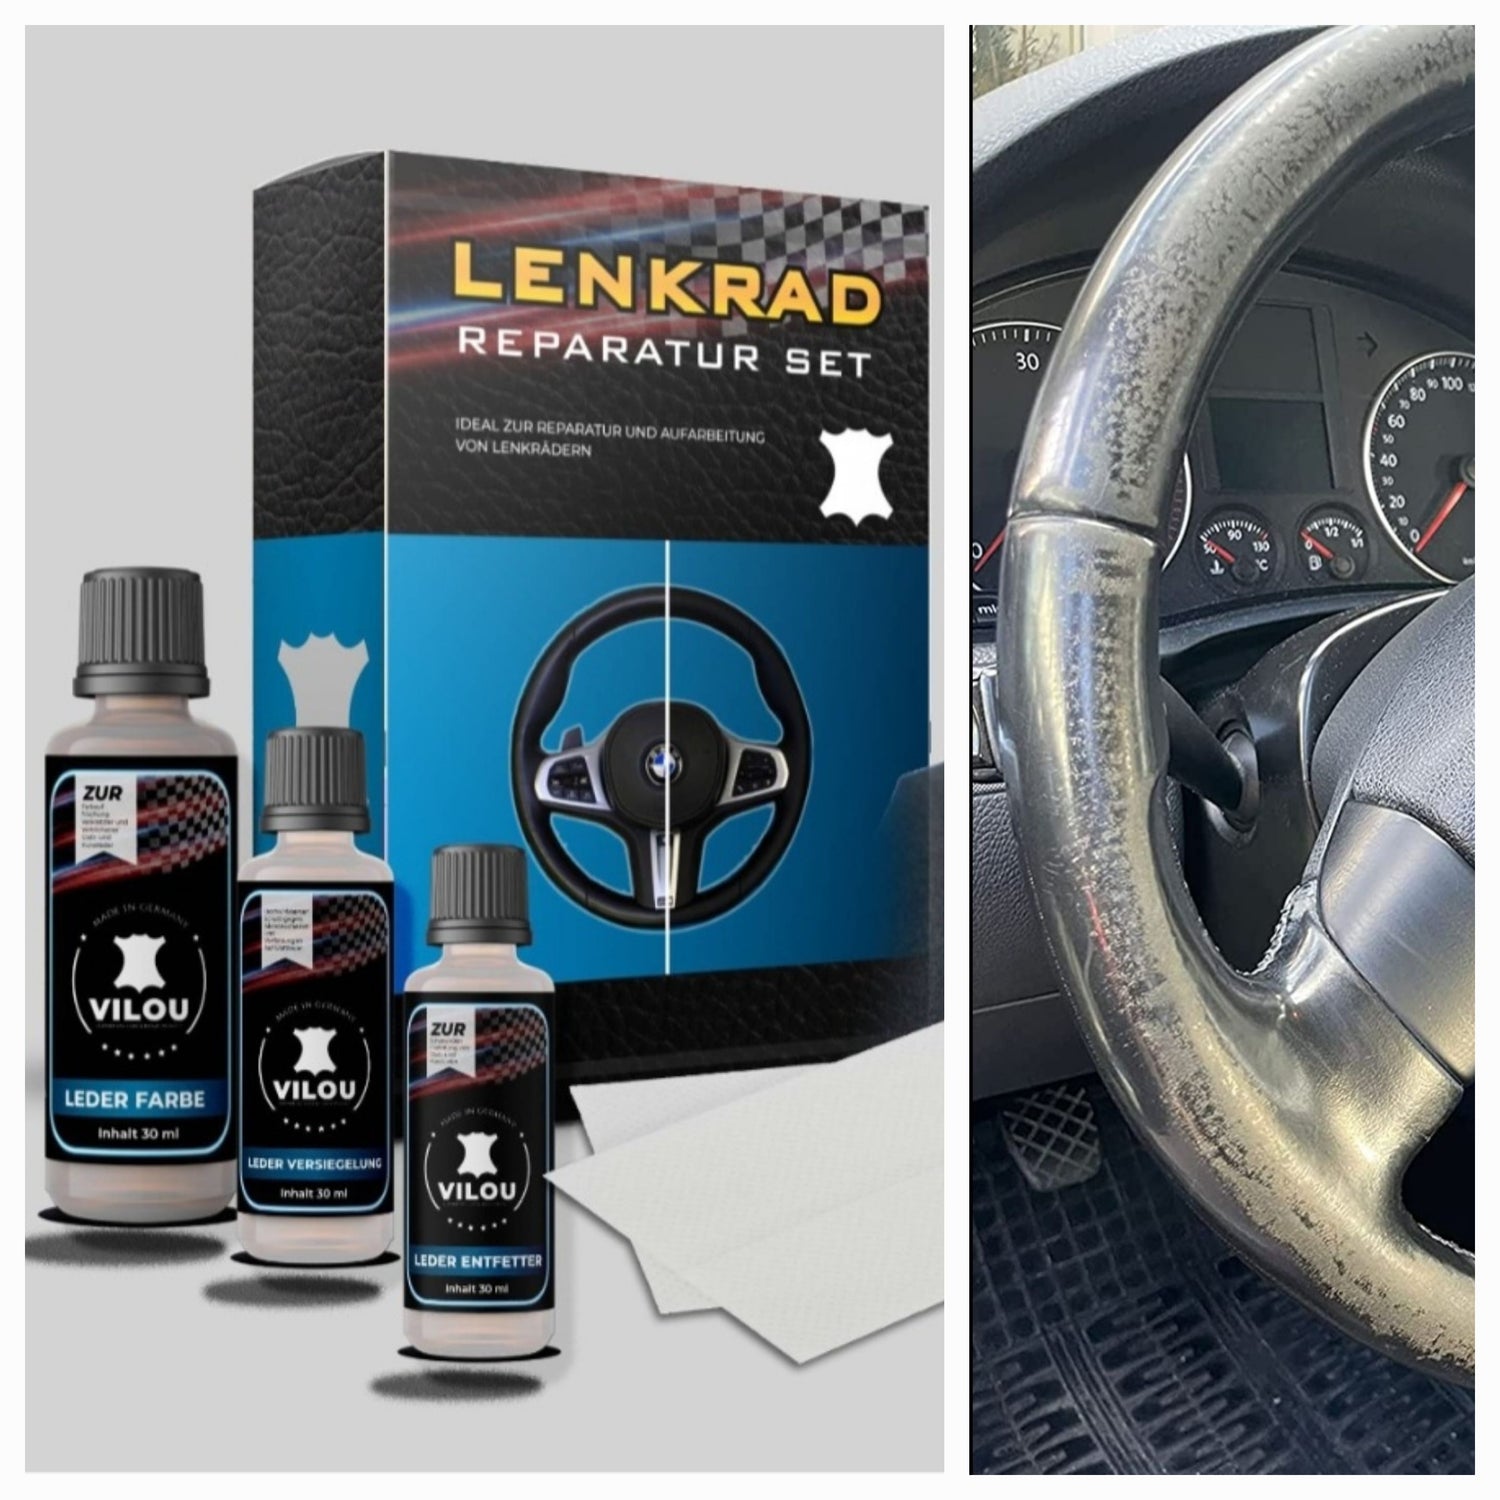 Leder reparatur Set für Lenkrad. BMW, Audi, Mercedes, schwarz